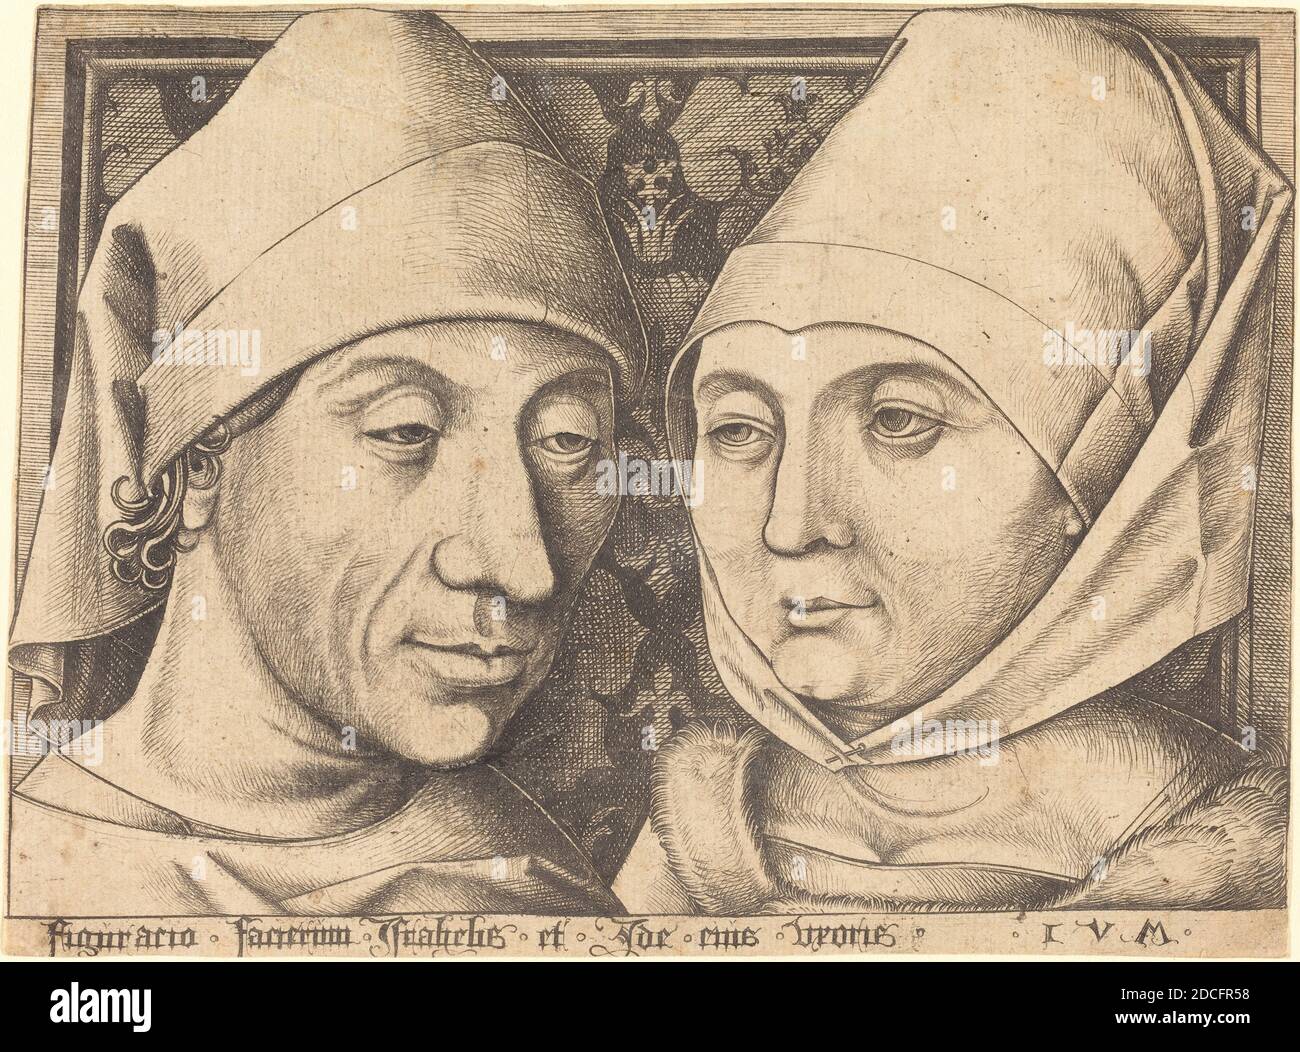 Israhel van Meckenem, (artist), German, c. 1445 - 1503, Double Portrait of Israhel van Meckenem and His Wife Ida, c. 1490, engraving, sheet (trimmed to plate mark): 13 x 17.5 cm (5 1/8 x 6 7/8 in Stock Photo